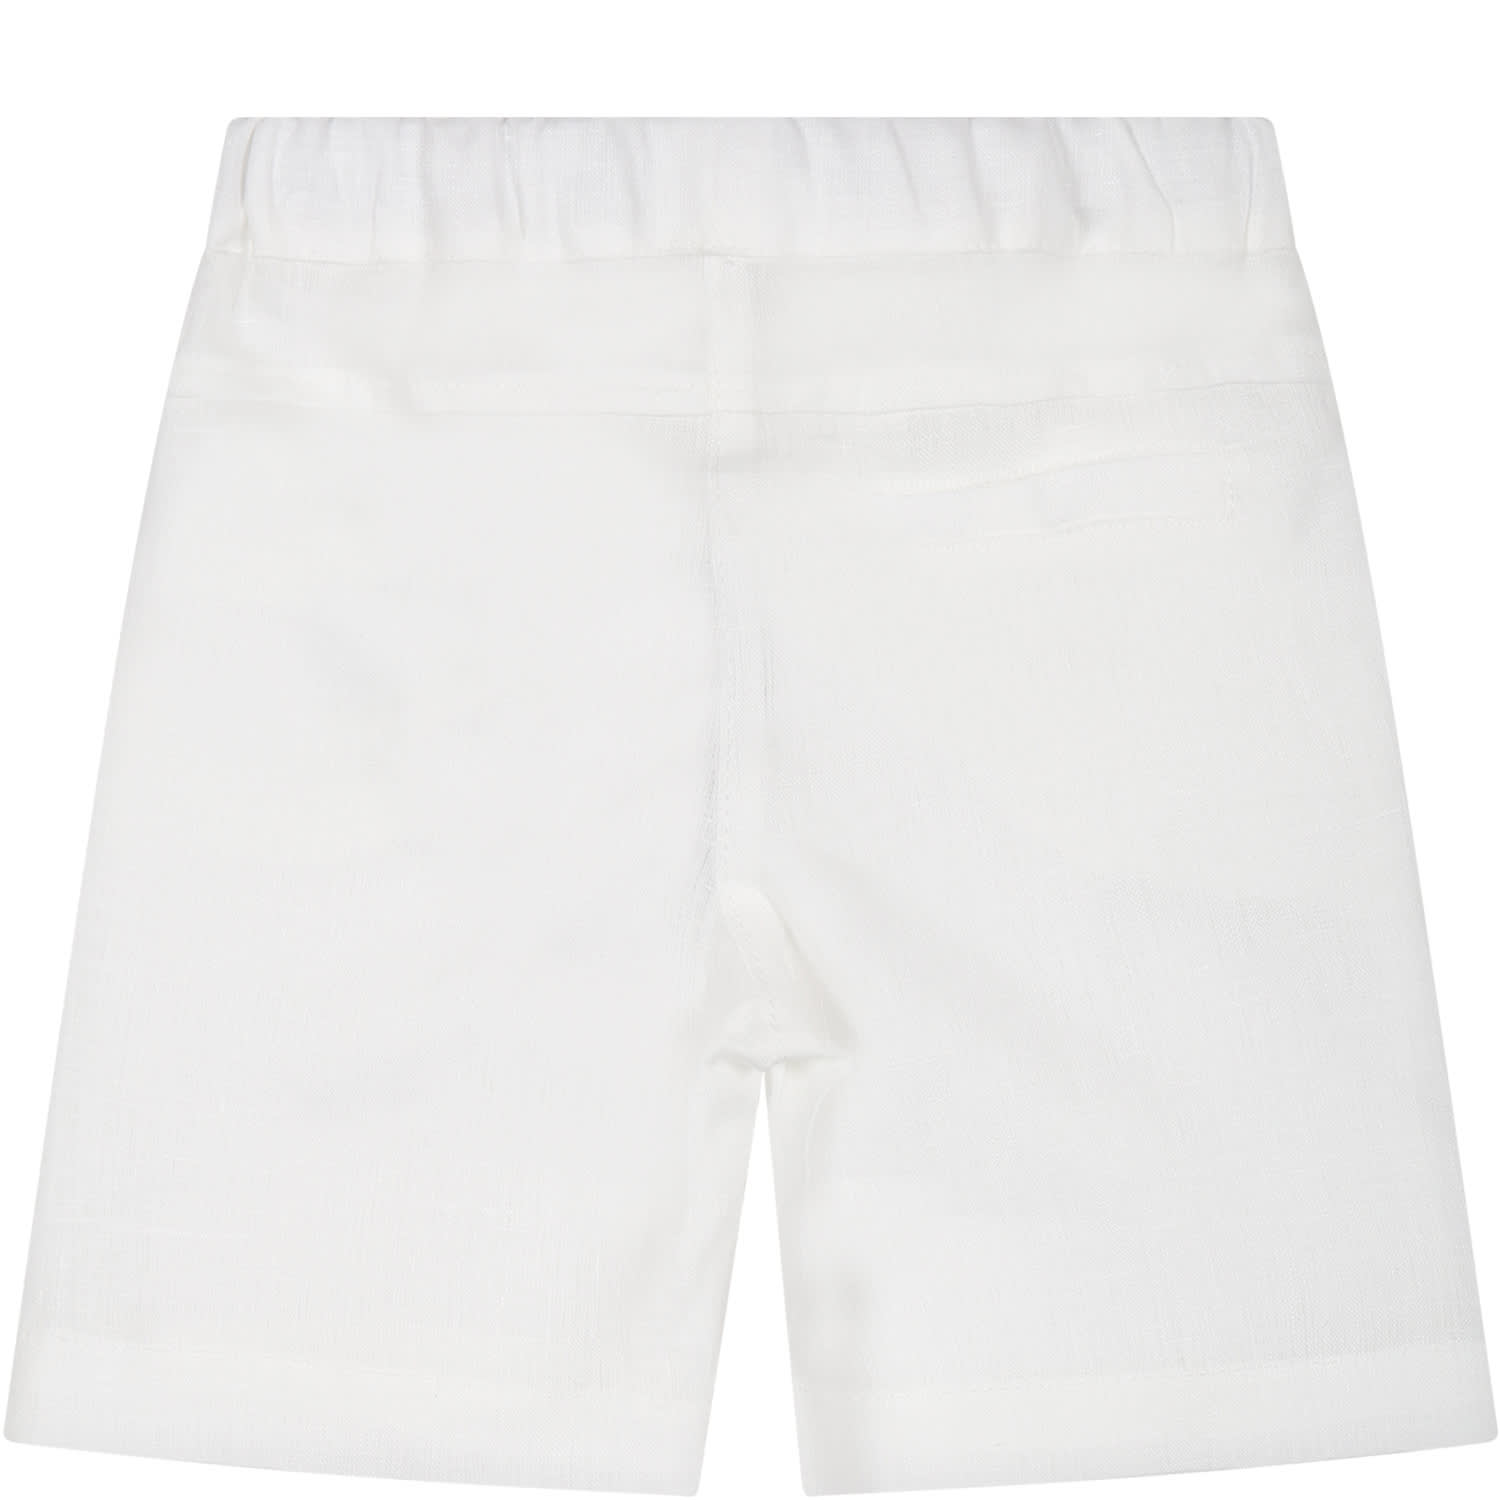 Shop Little Bear White Shorts For Baby Boy